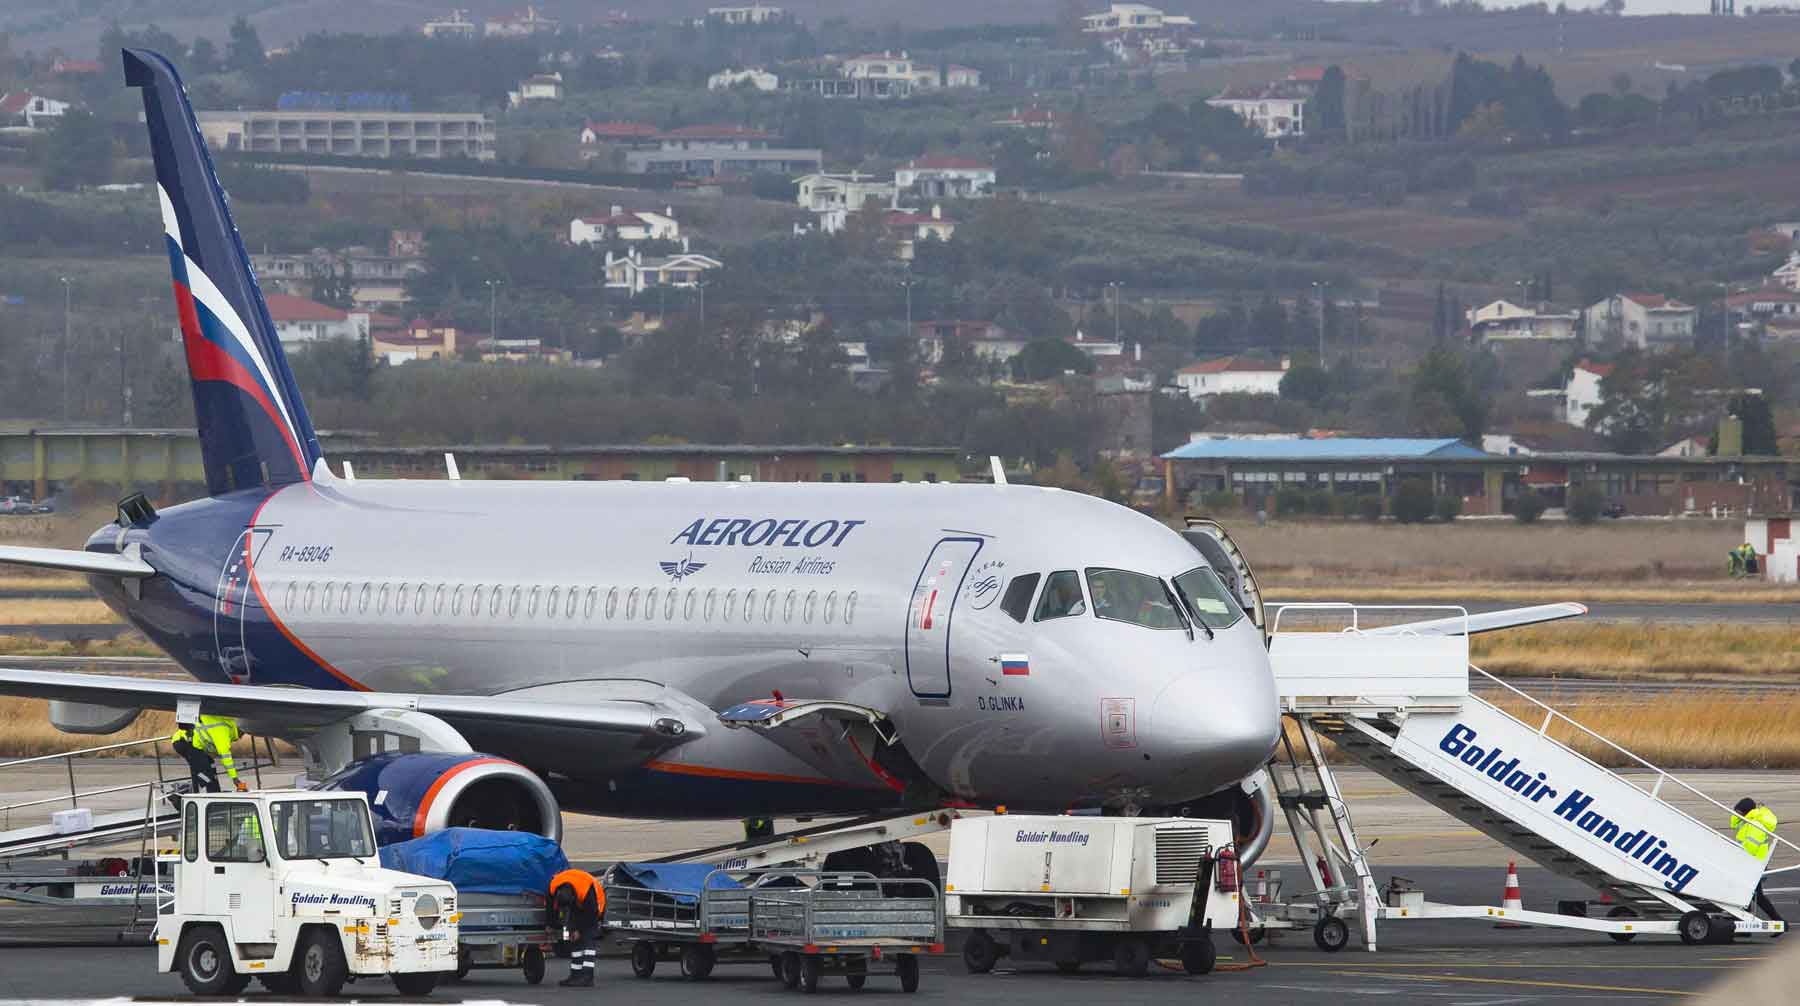 Представители авиакомпании «Ямал» работают с пассажирами, заявили в пресс-службе авиаперевозчика Фото: © GLOBAL LOOK press / Nicolas Economou